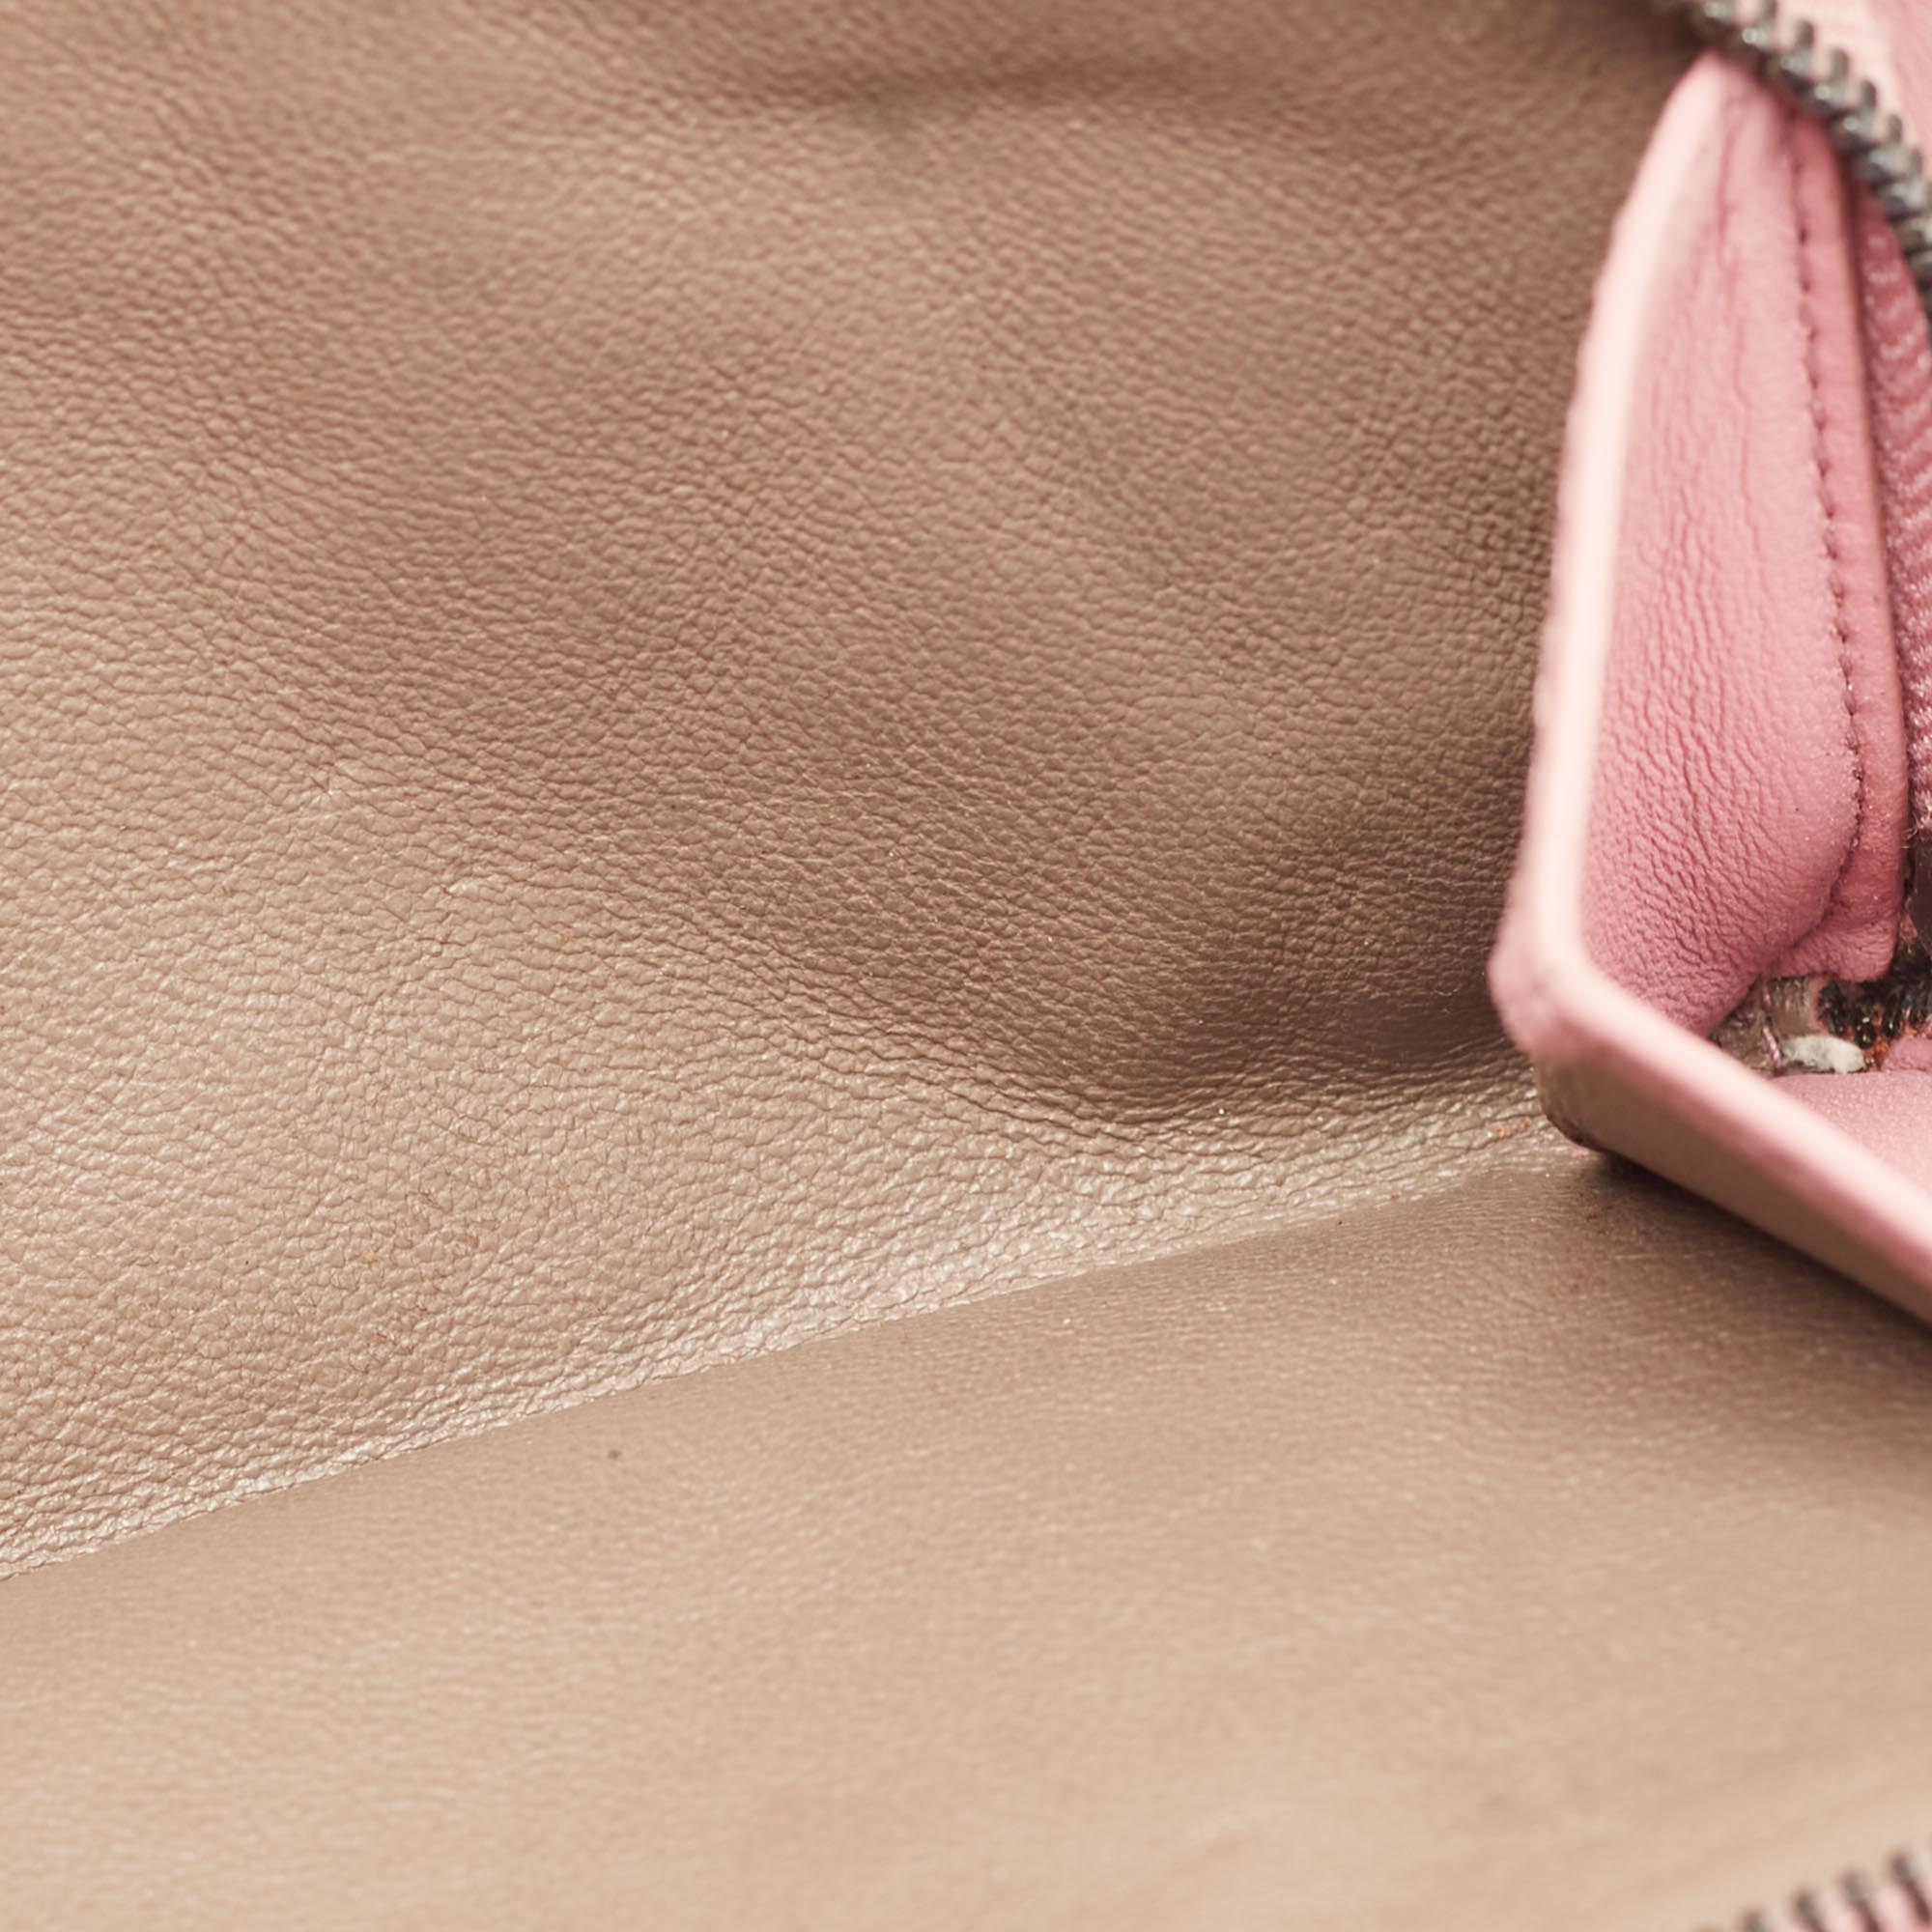 Bottega Veneta Pink Intrecciato Leather French Compact Wallet